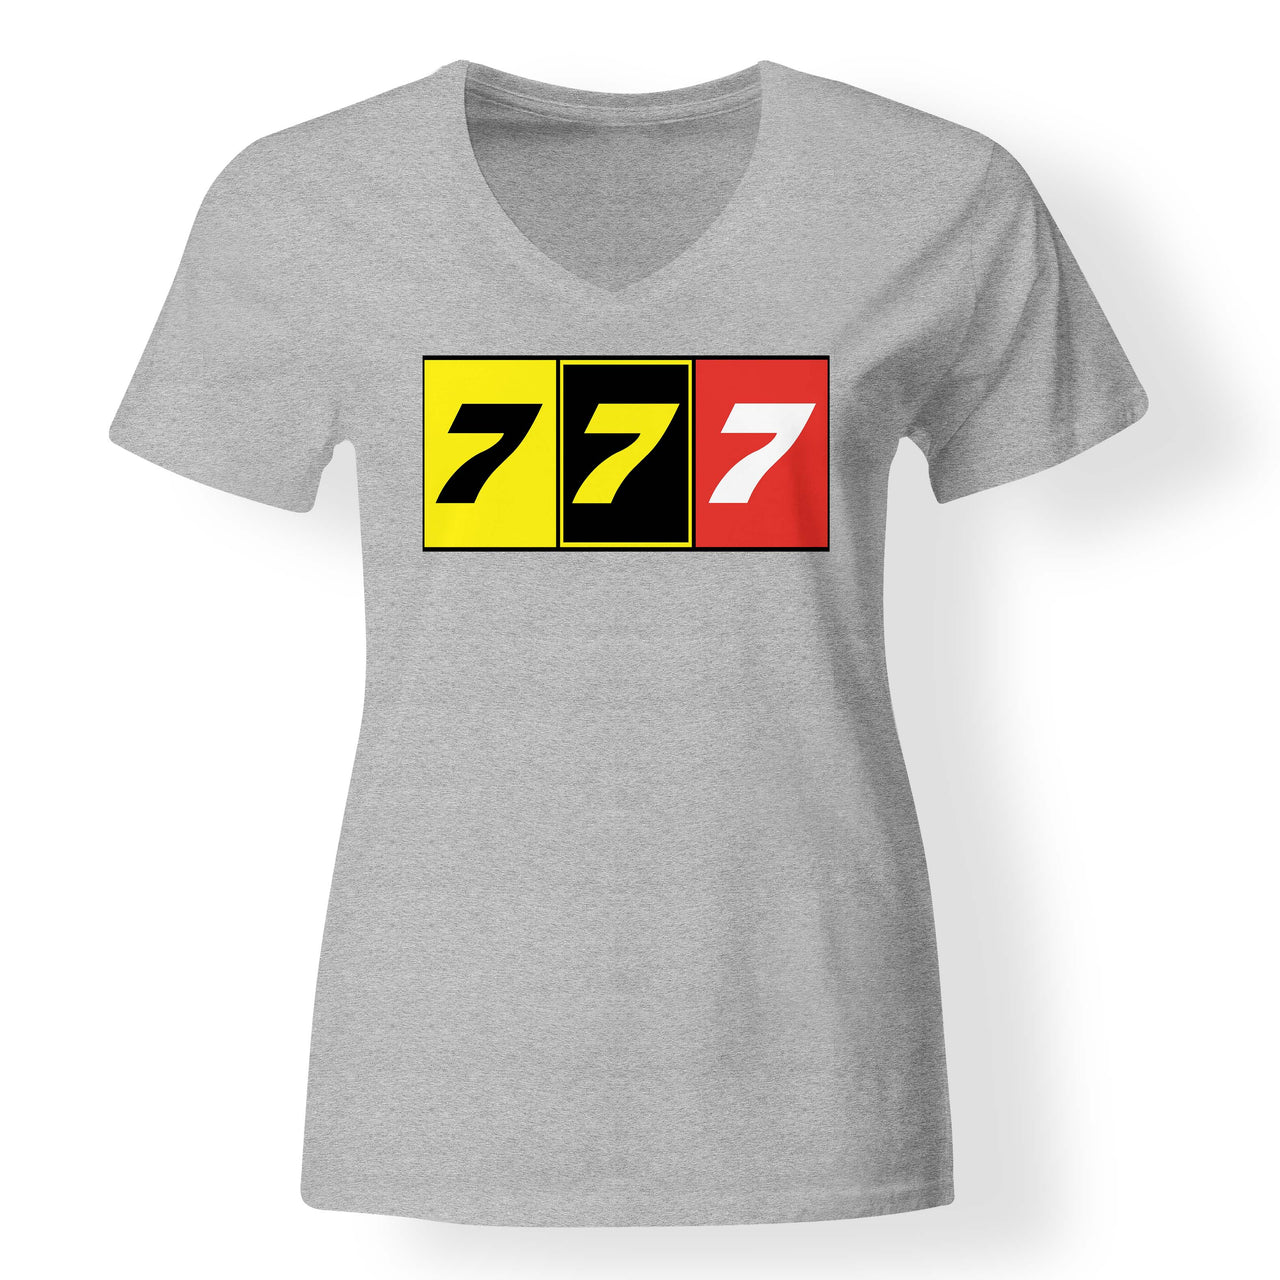 Flat Colourful 777 Designed V-Neck T-Shirts